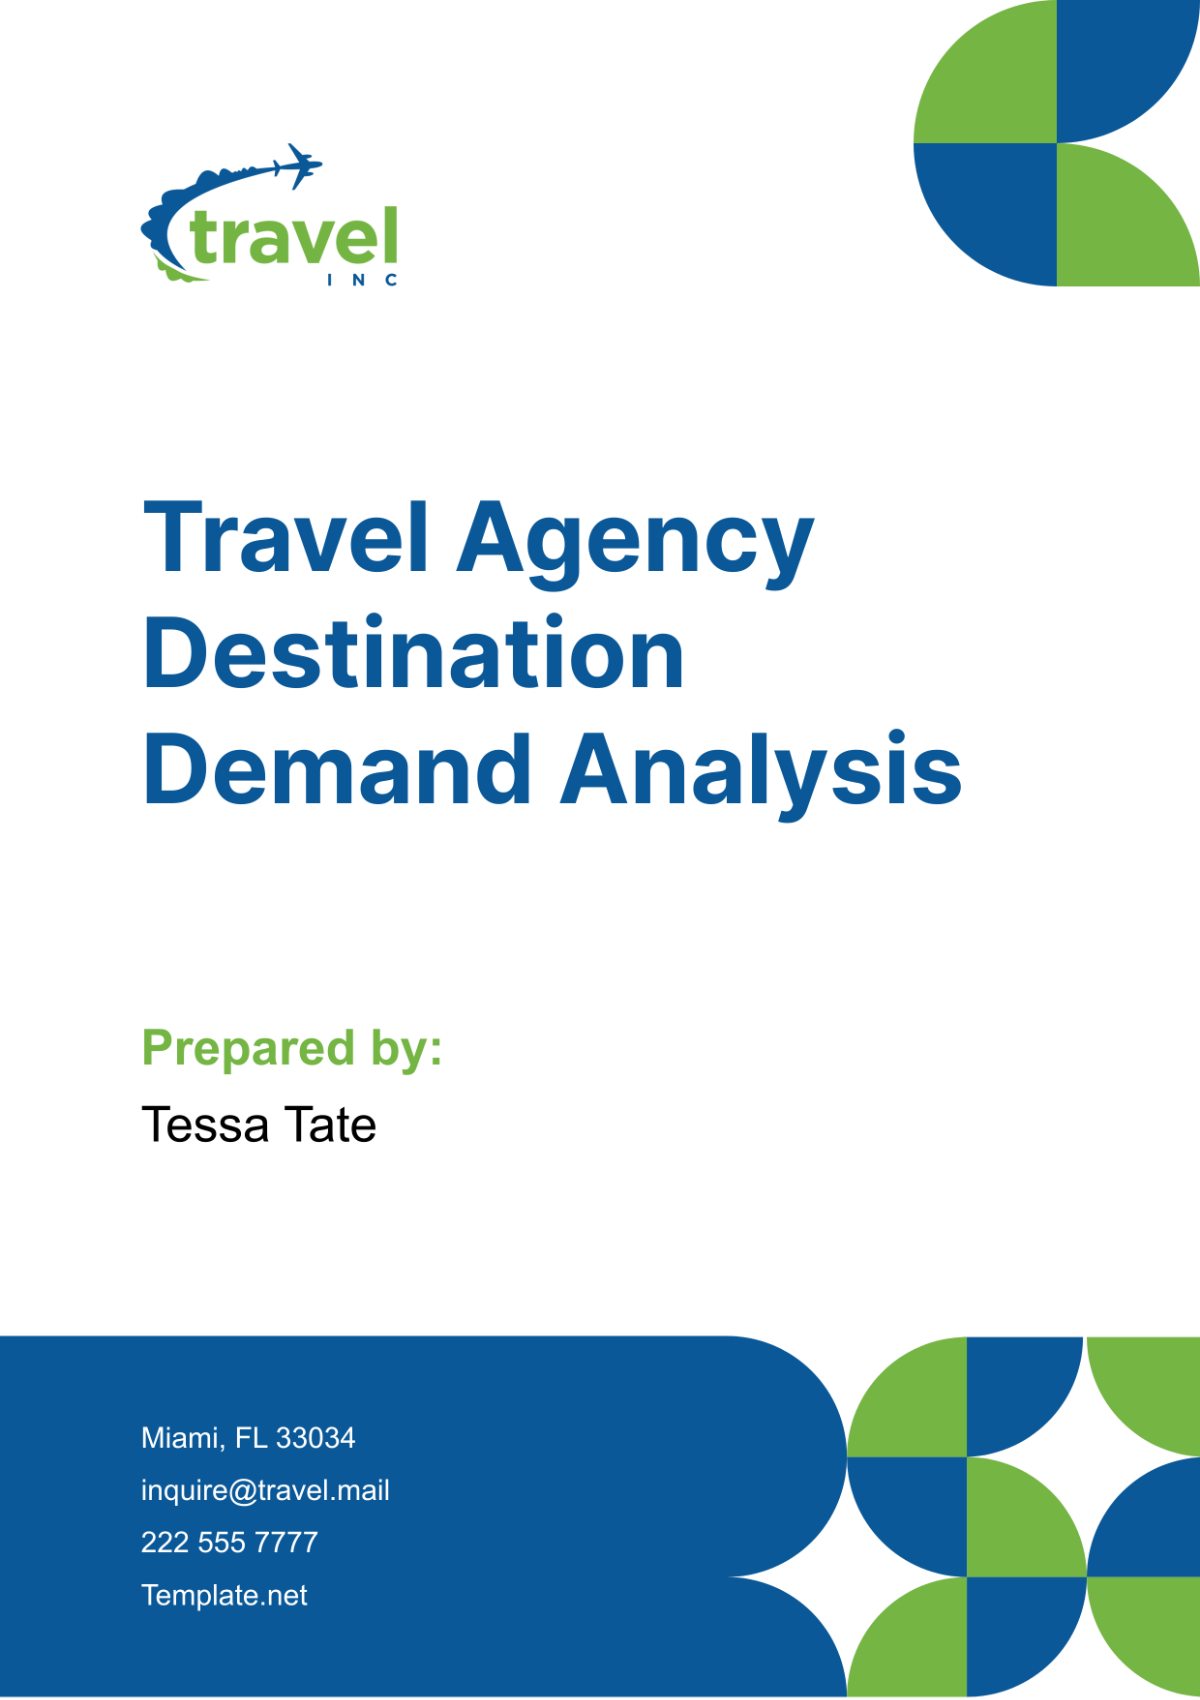 Travel Agency Destination Demand Analysis Template